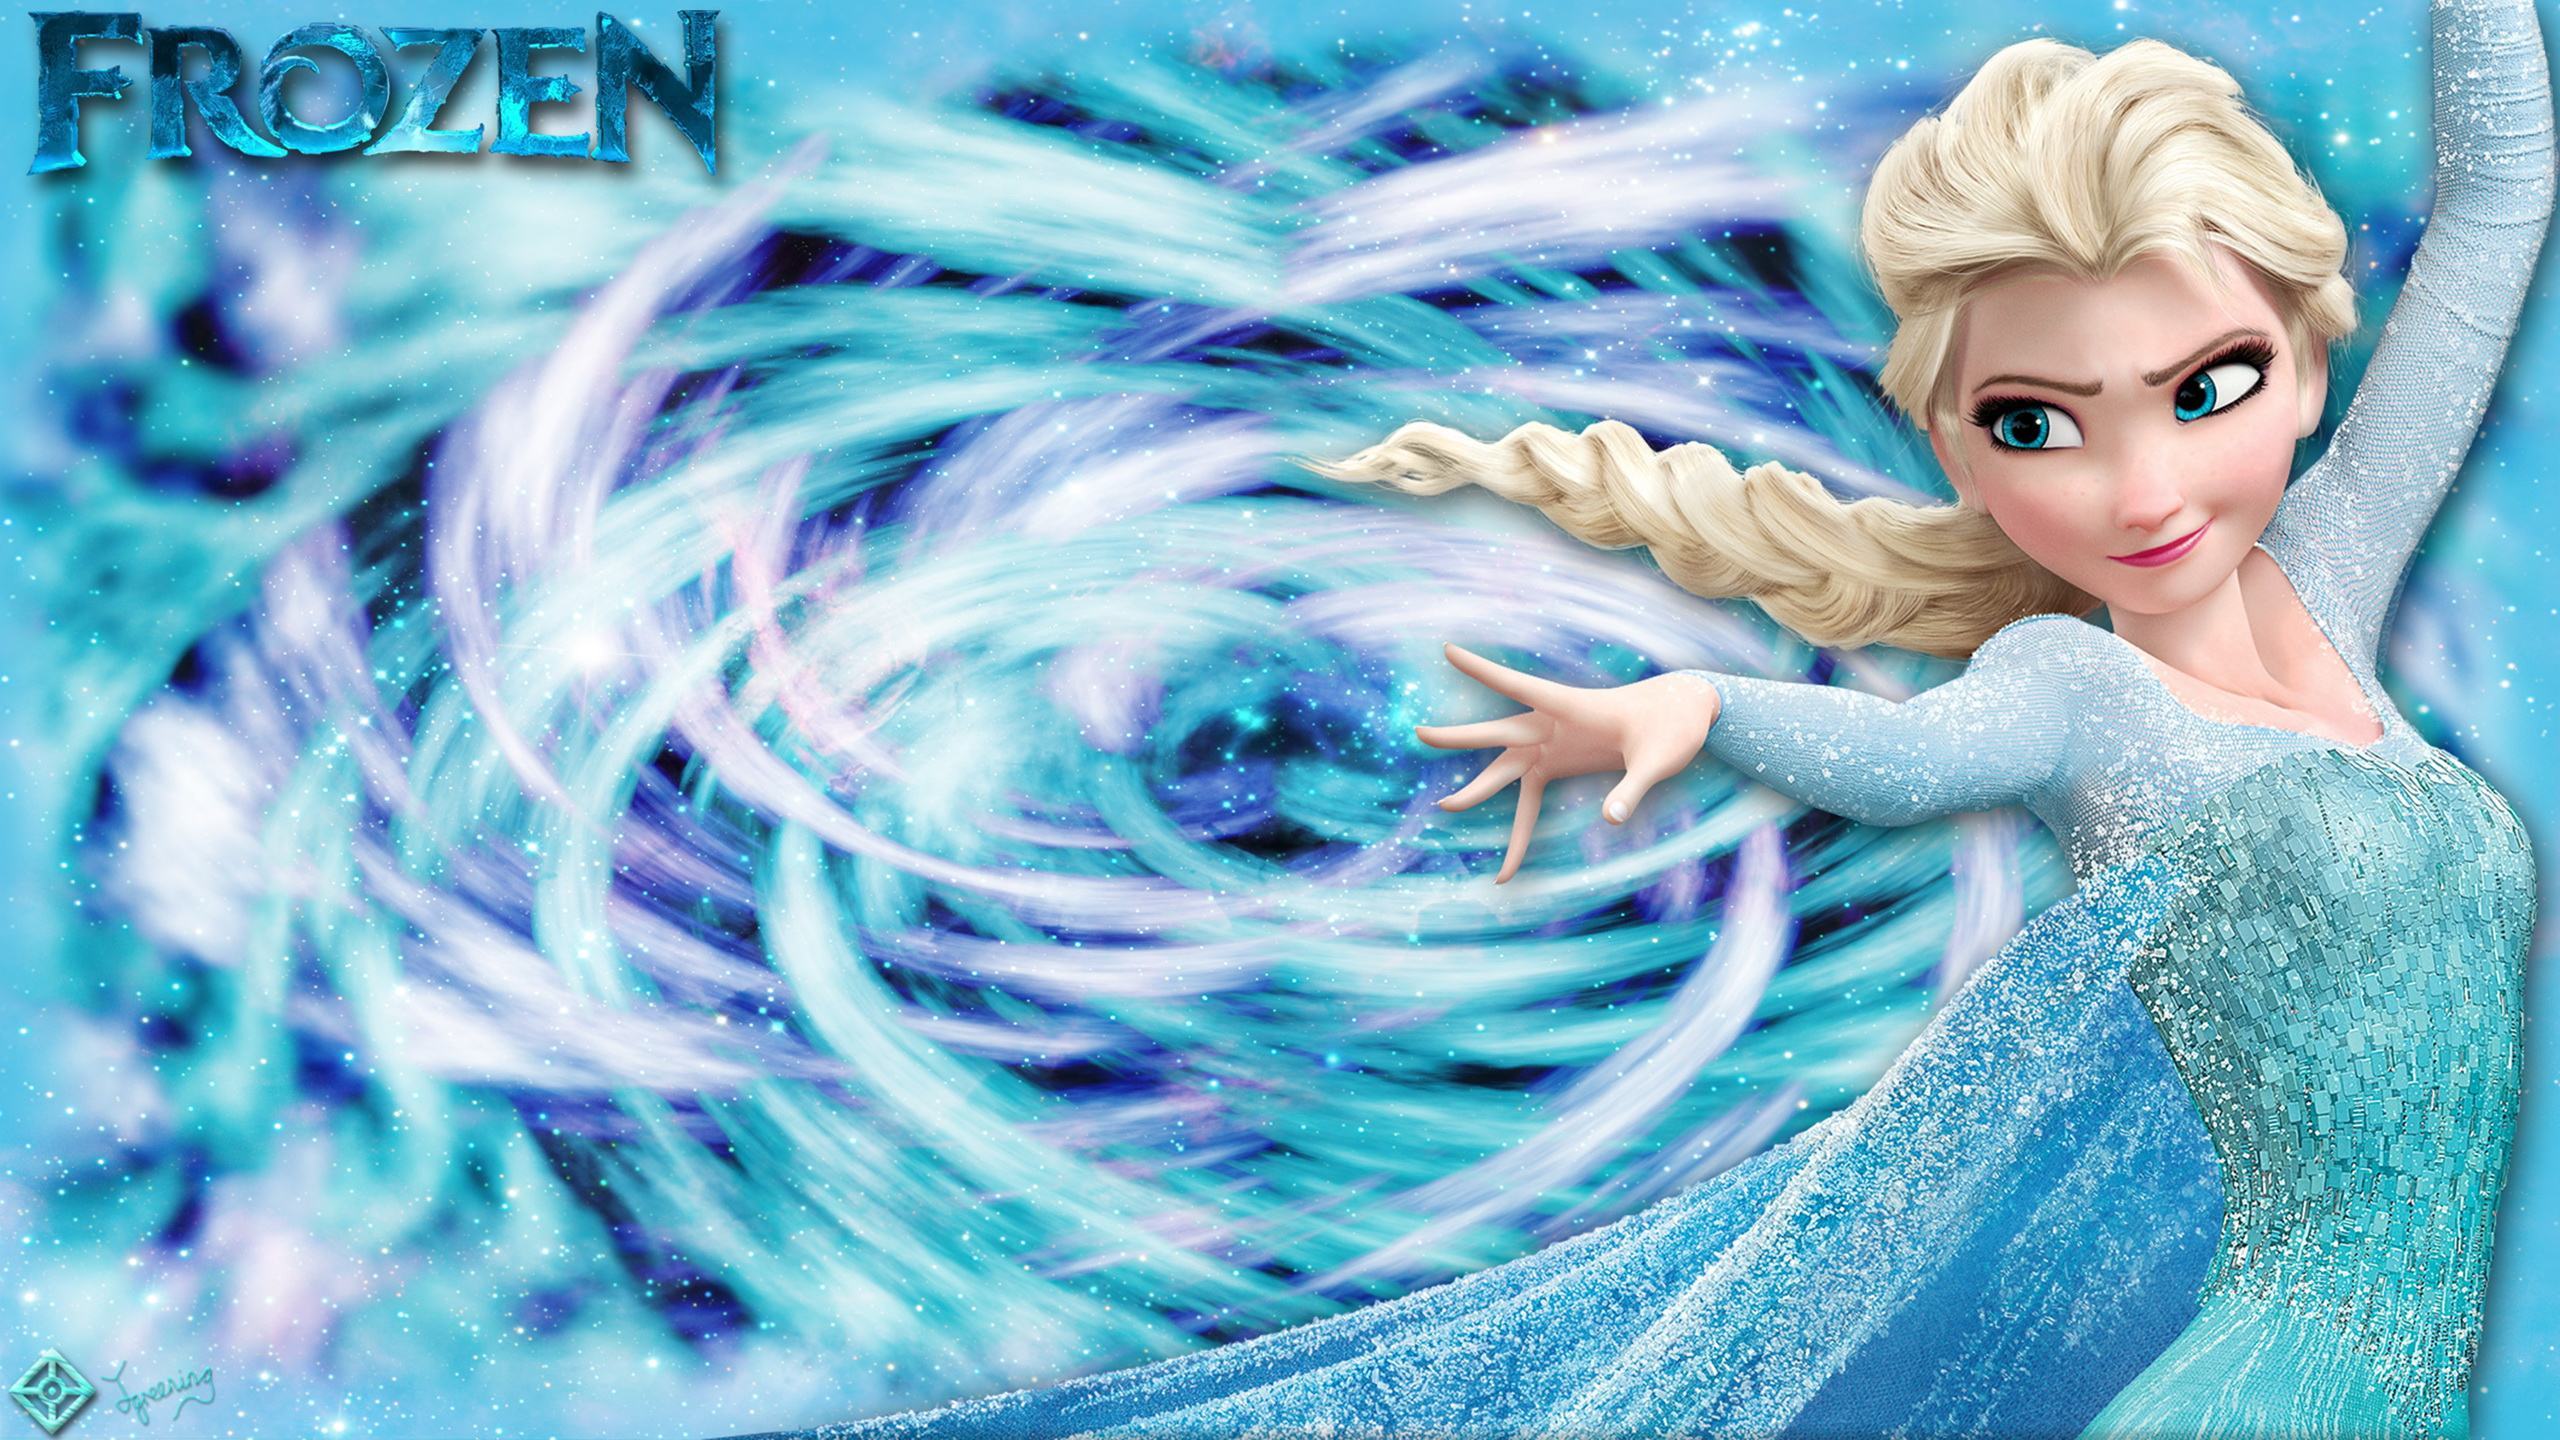 Hình nền Elsa phim Frozen cực đẹp